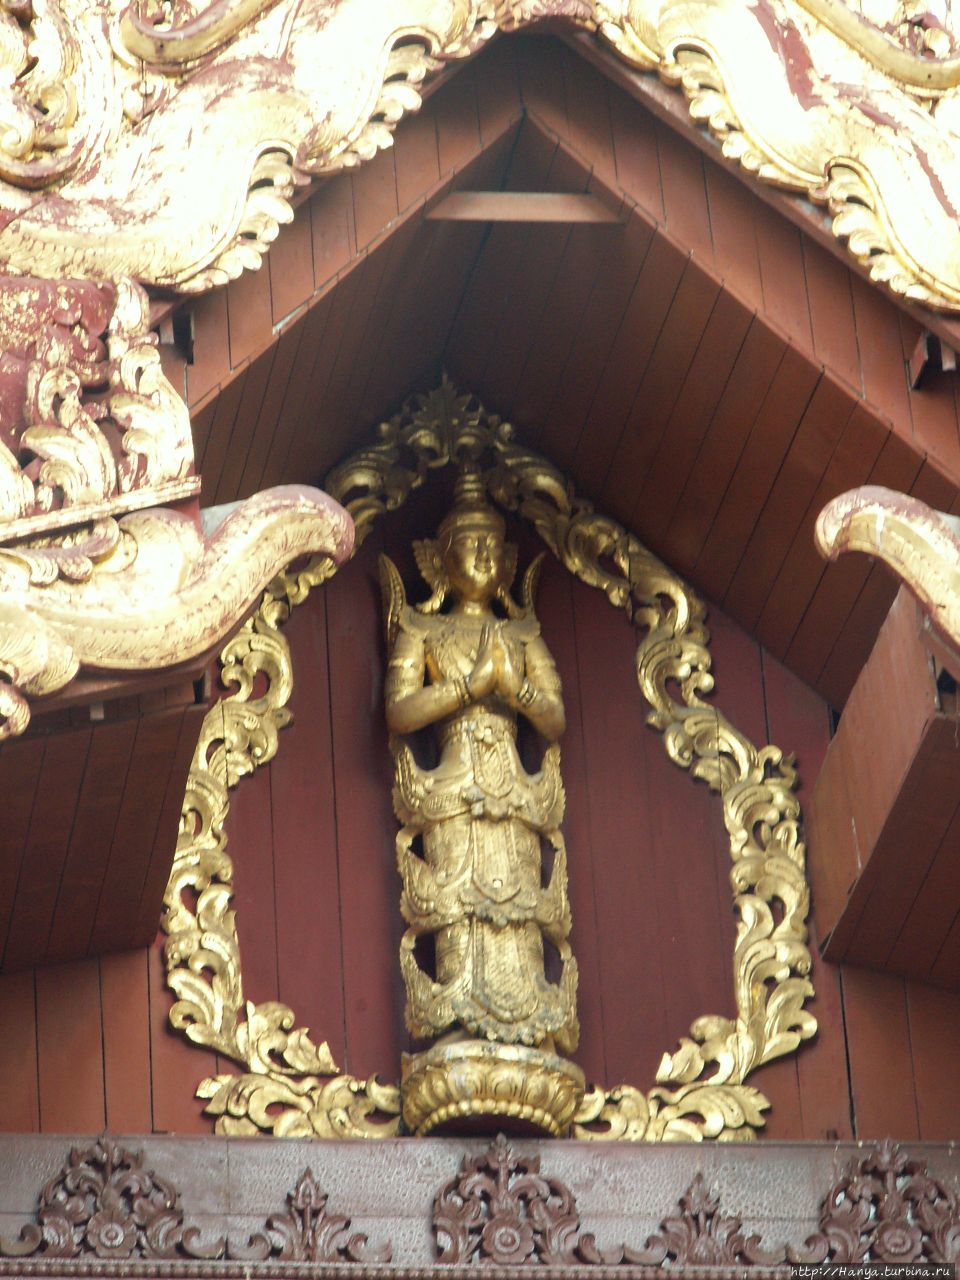 Пагода Шведагон